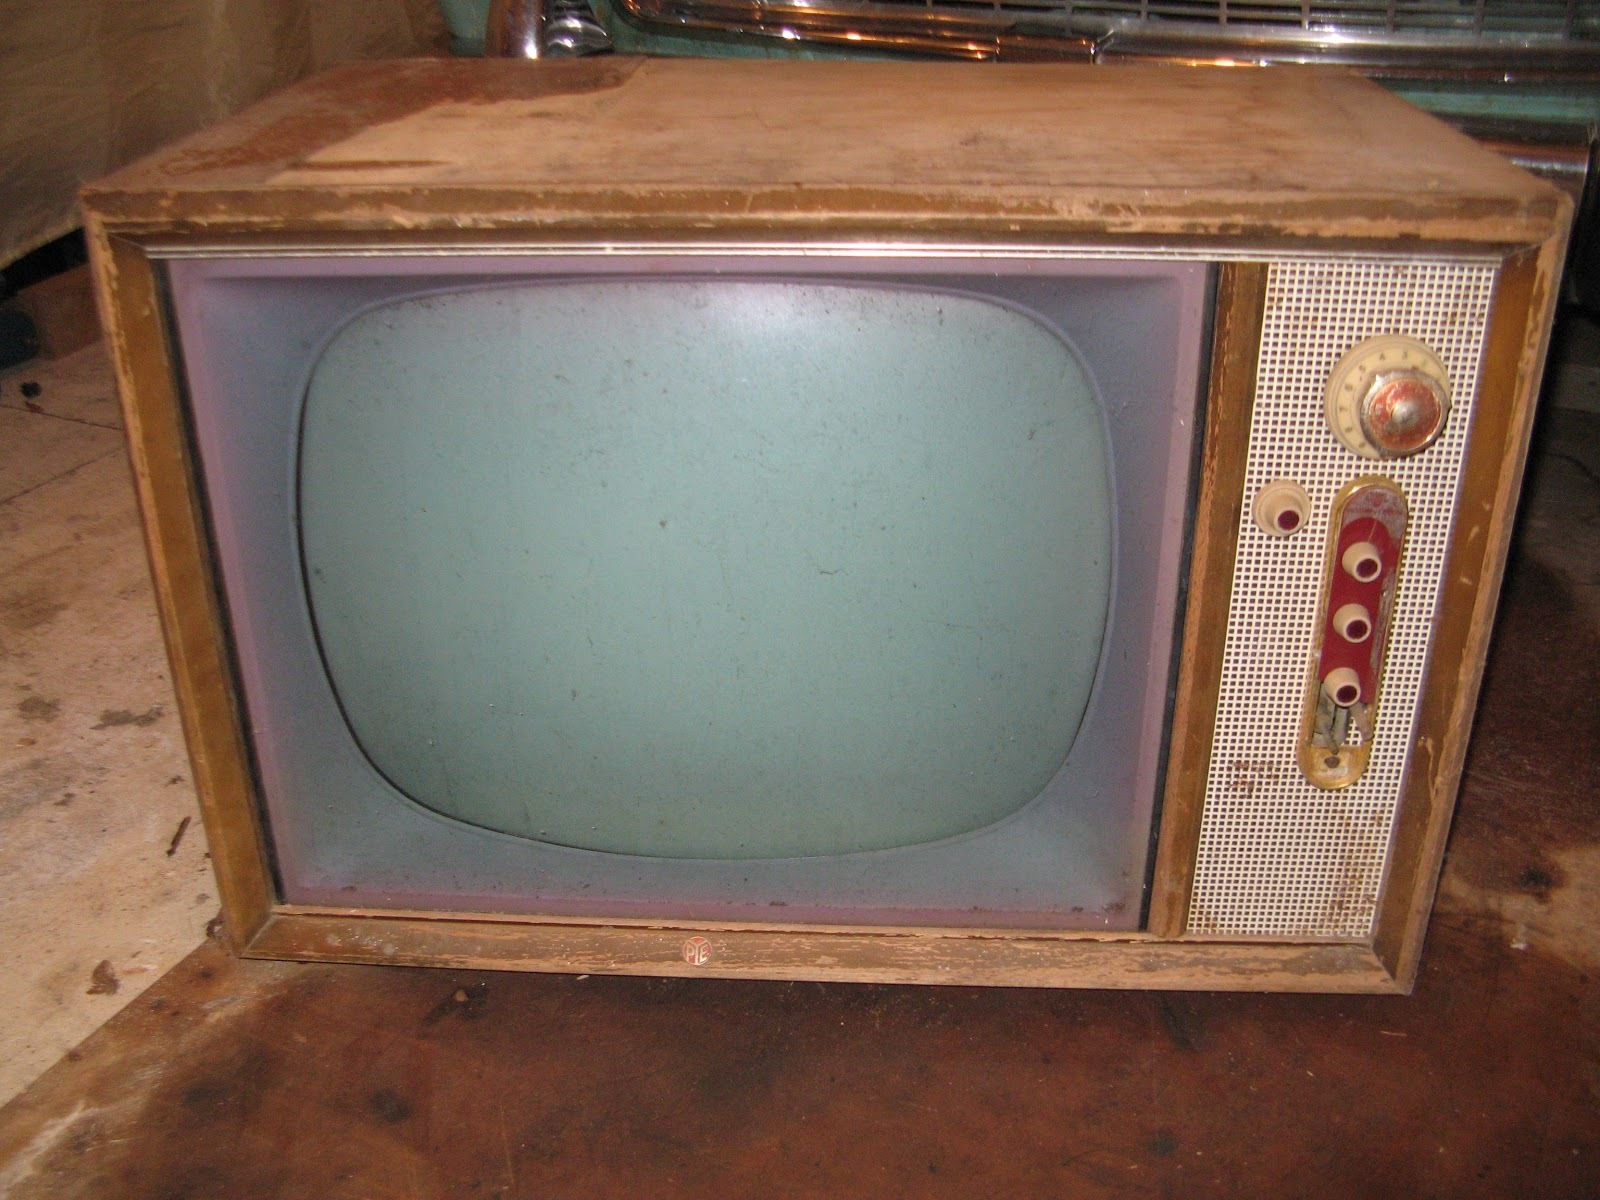 Pye 201T 21" Television (Source: 'Glen, http://nzvintagetvradio.blogspot.com/')